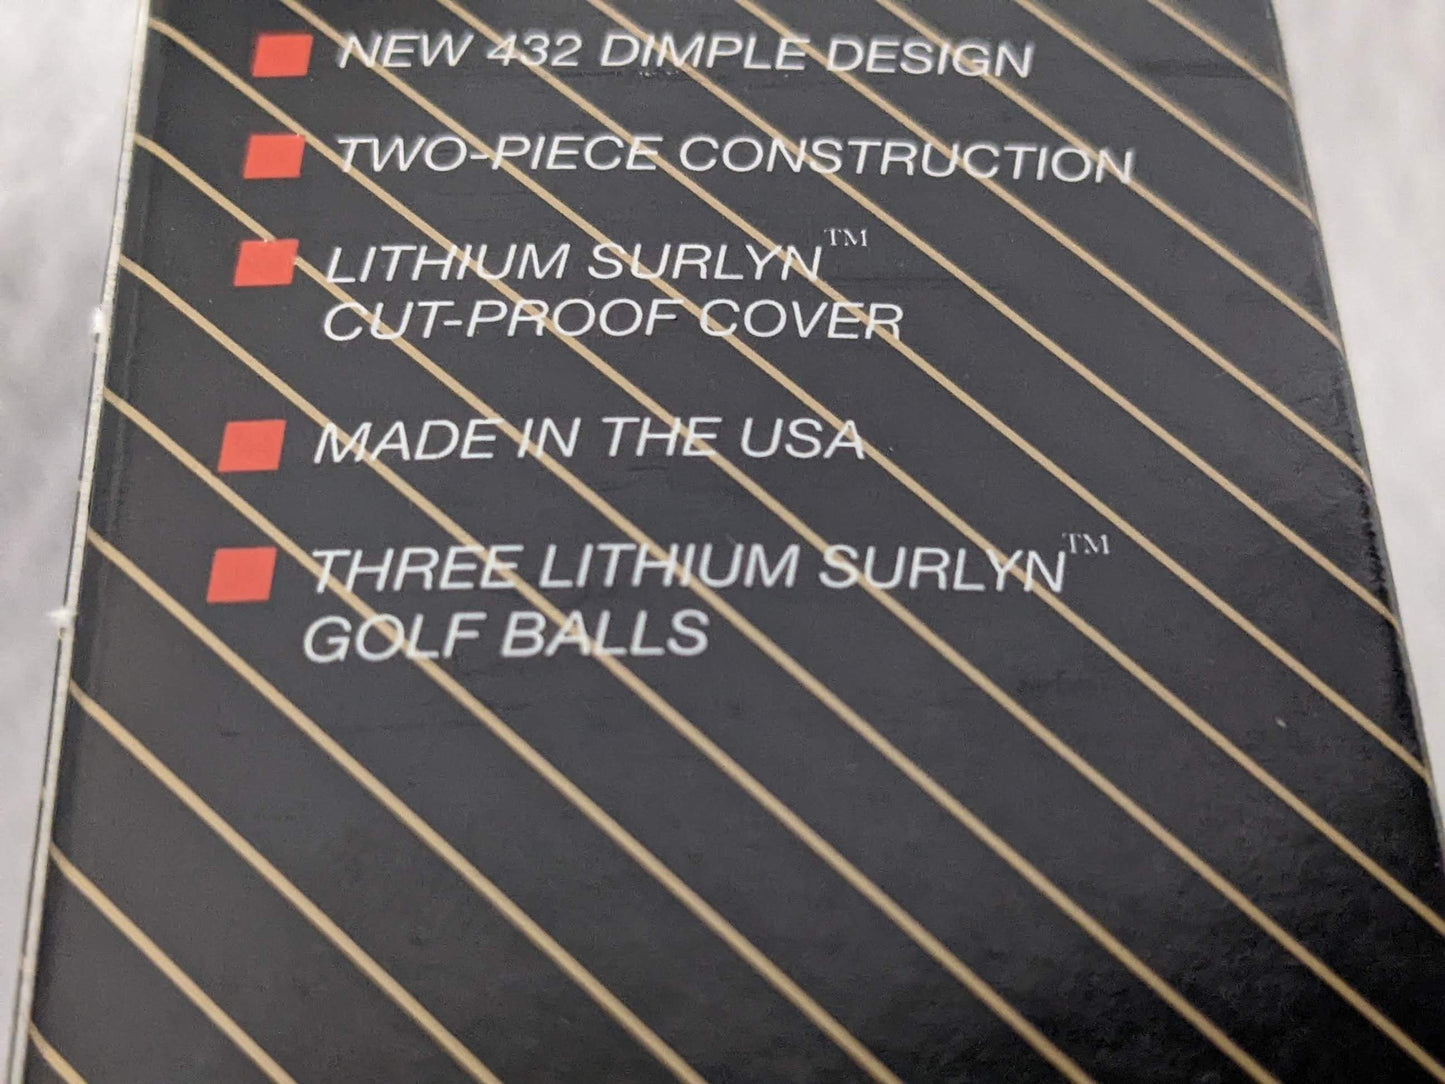 Pro-Flight Box of Golf Balls Size 3 Balls Color White Condition NEW